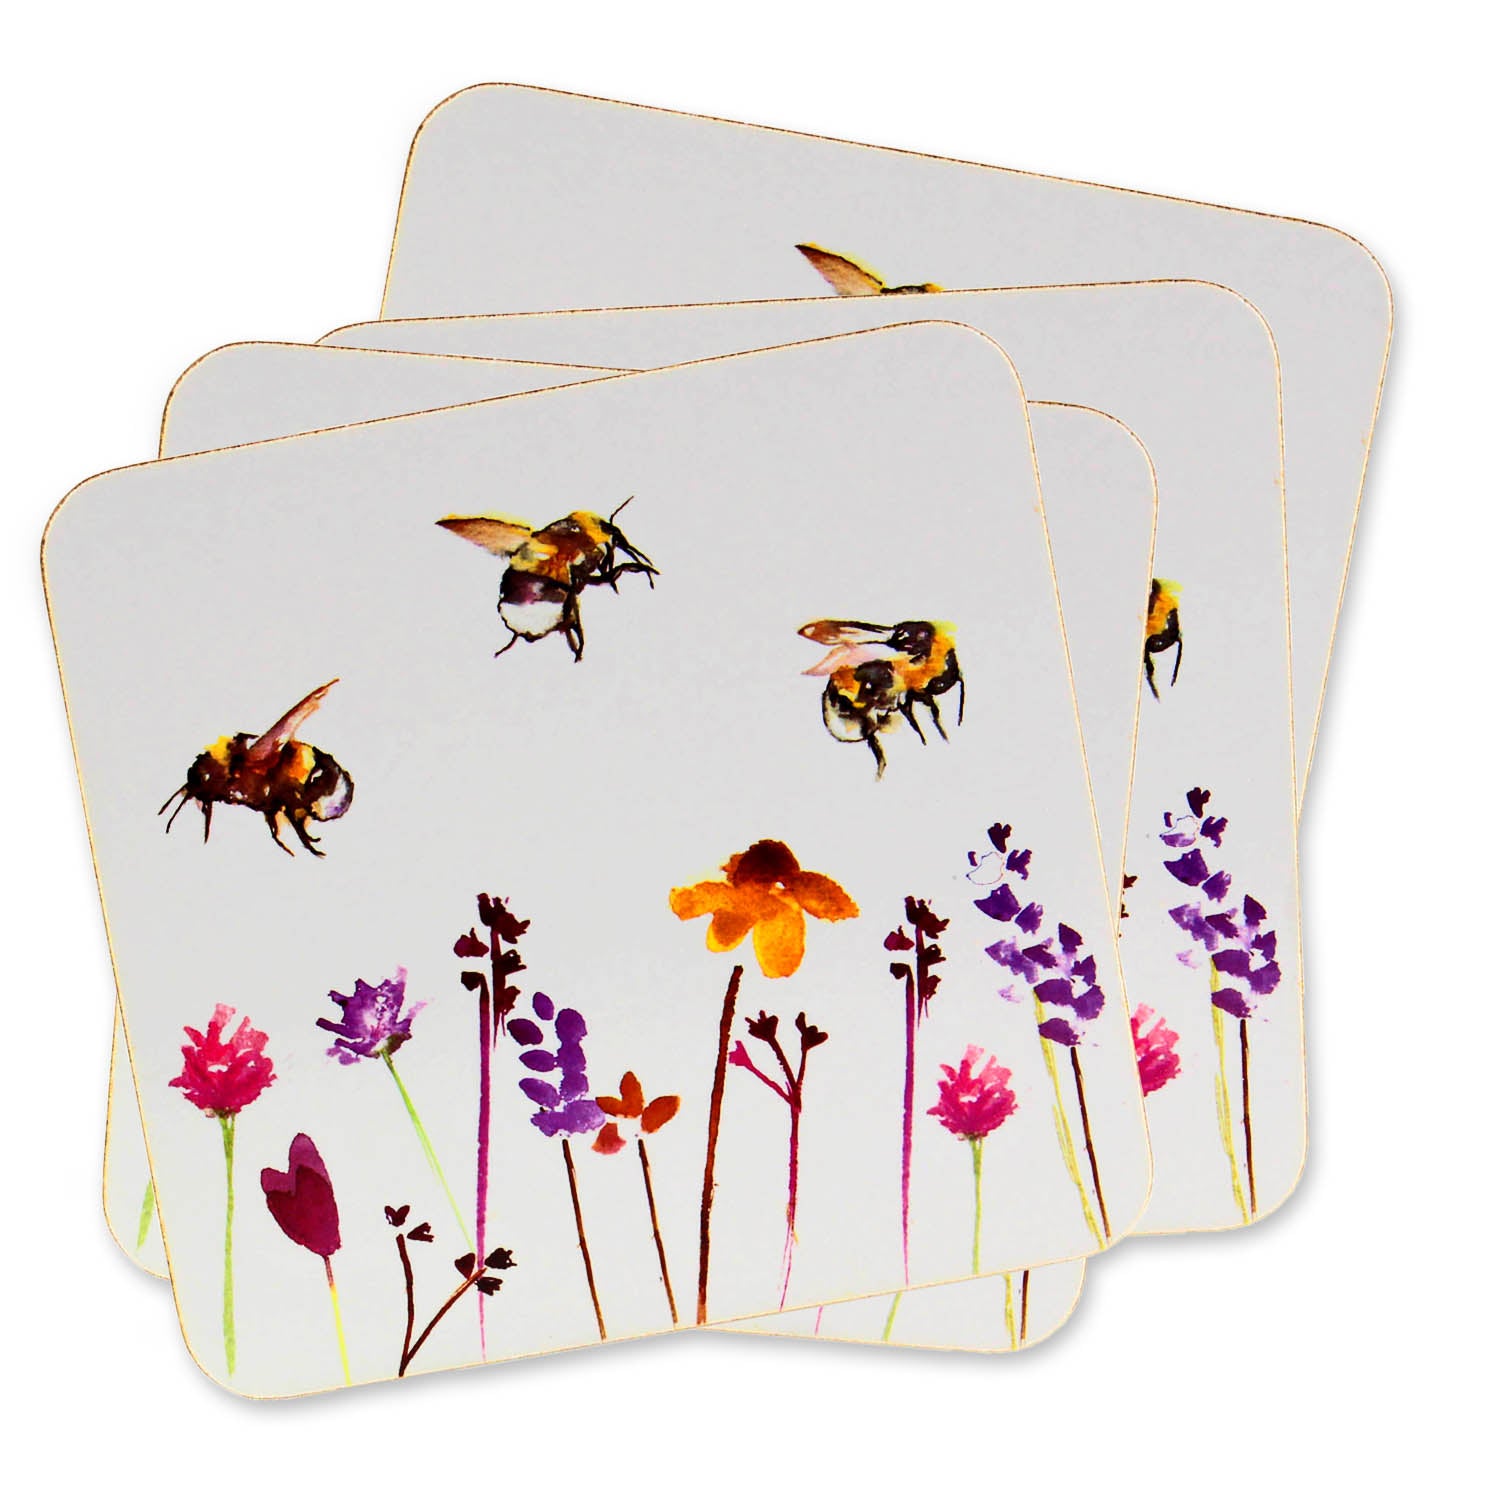 Set of 4 Bees & Flowers Coasters